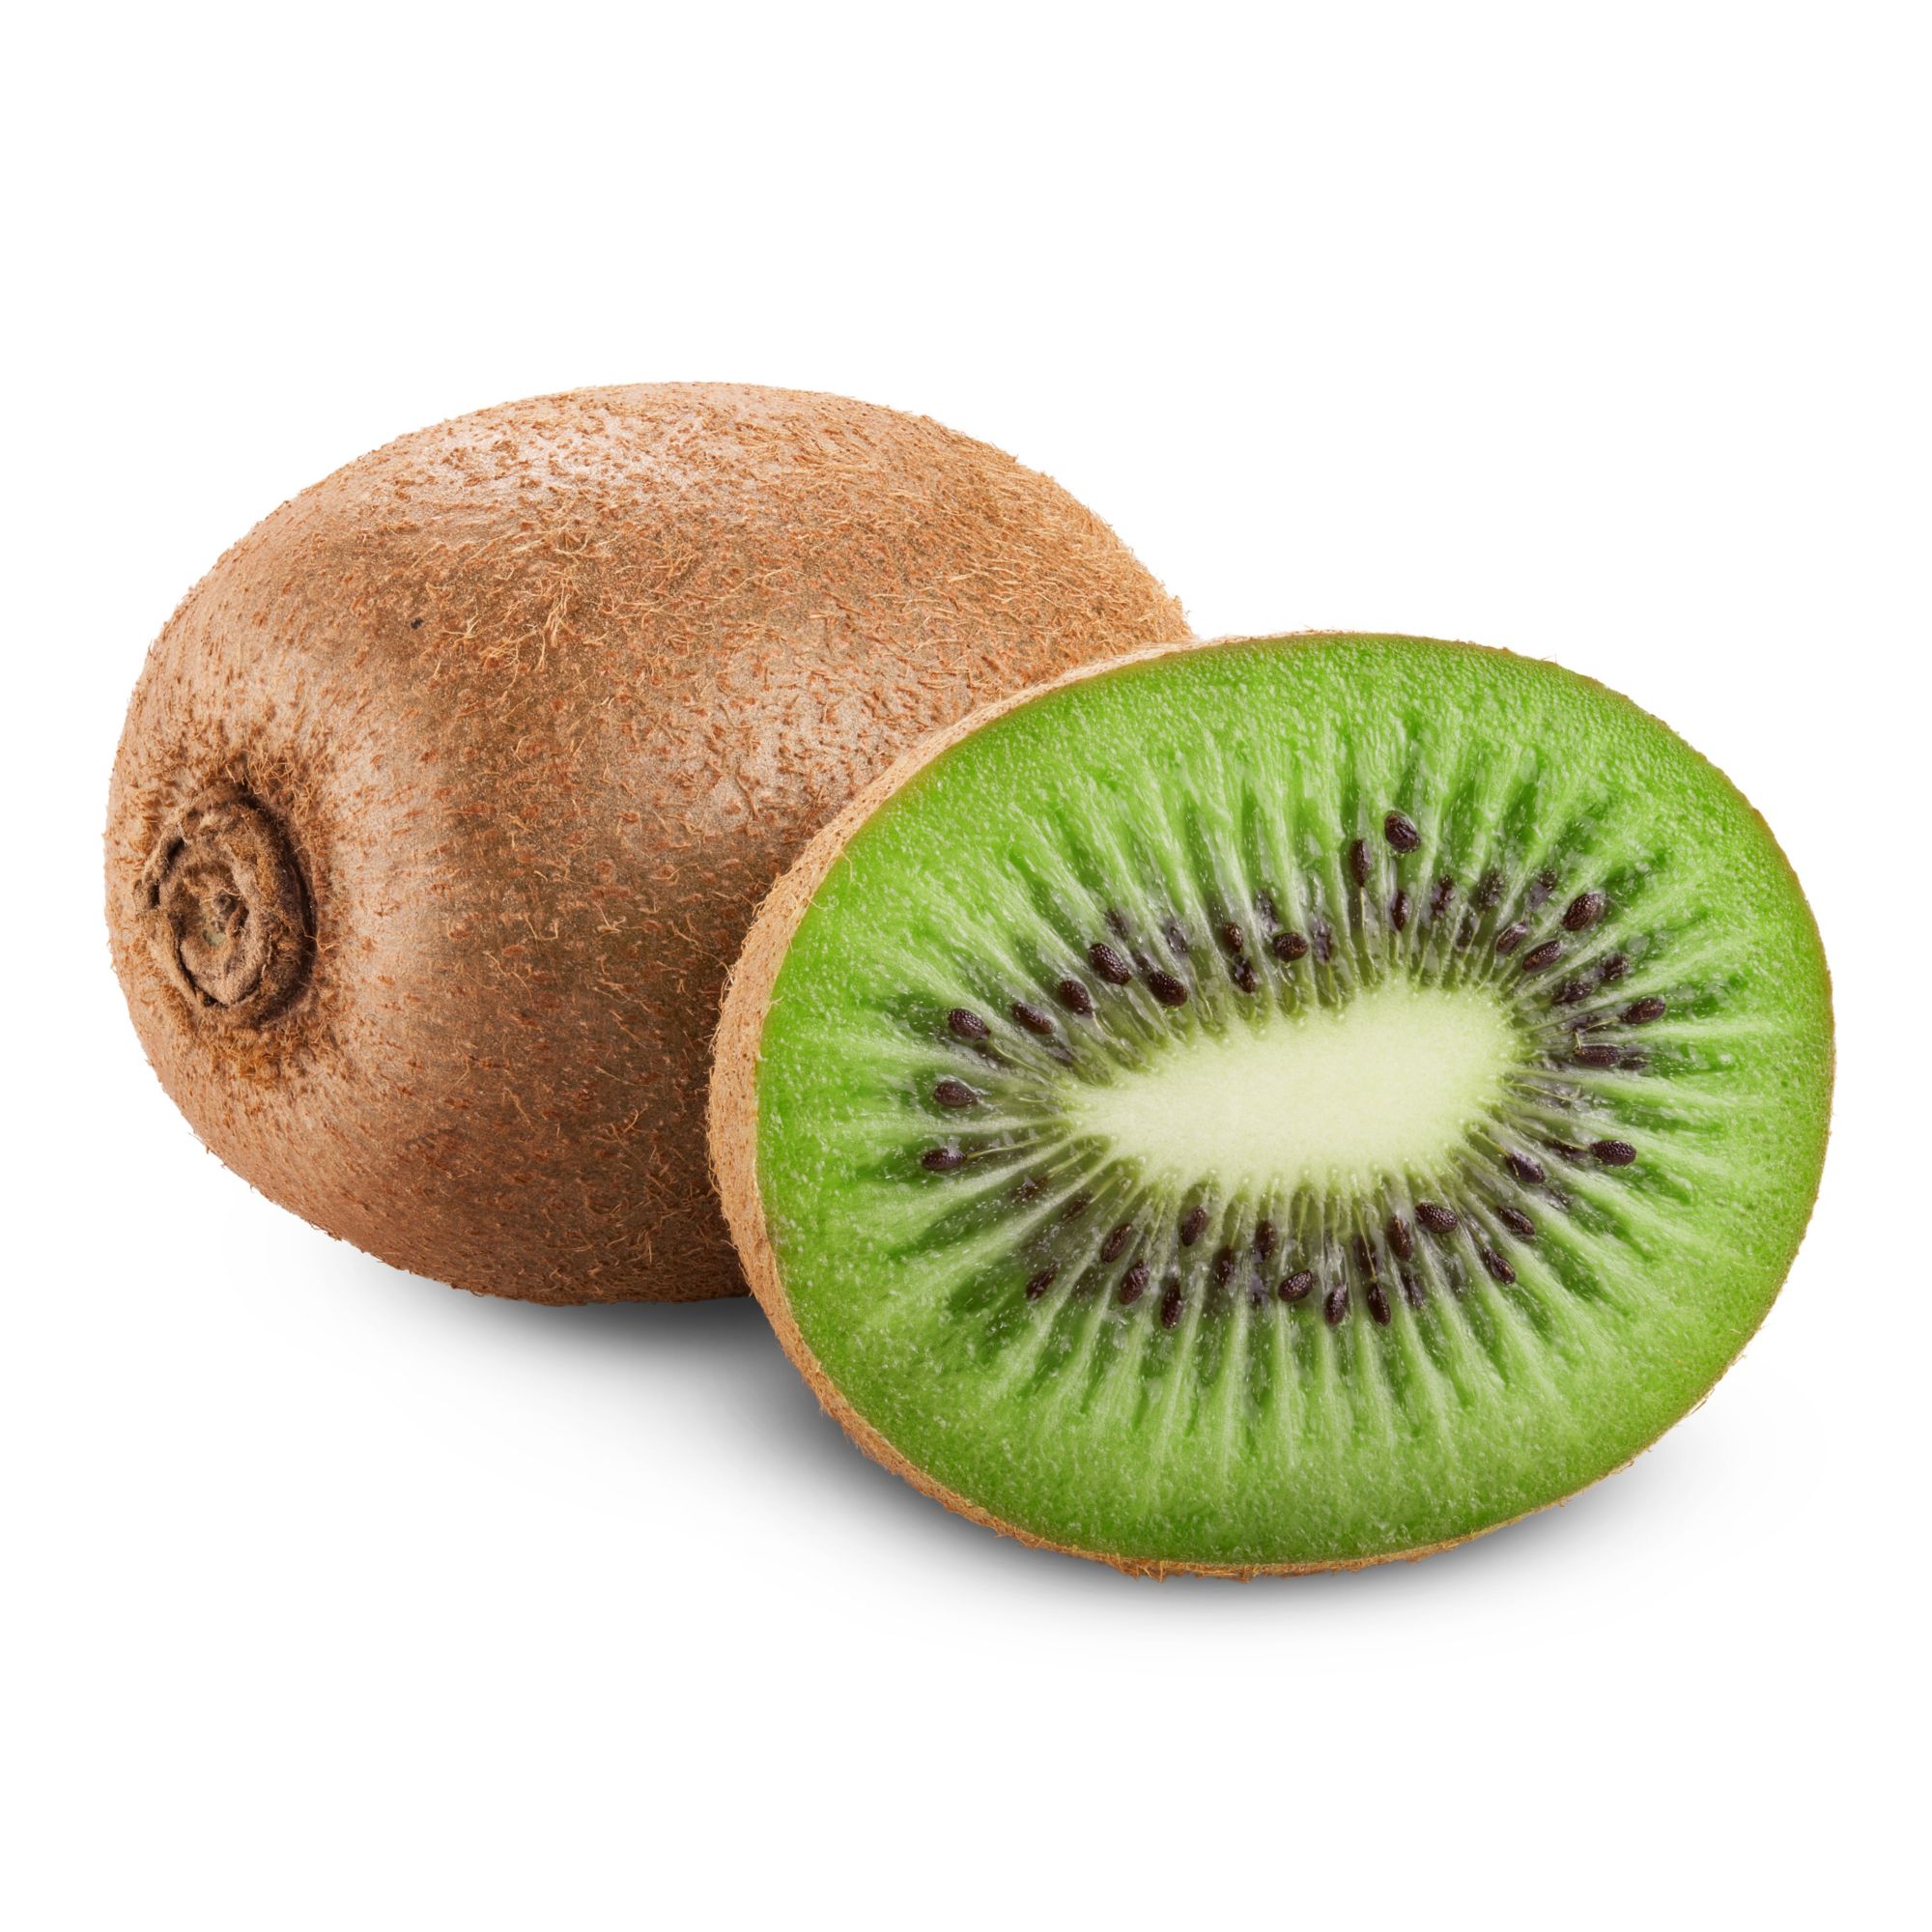 Organic Green Kiwi Fruit, 1 lb